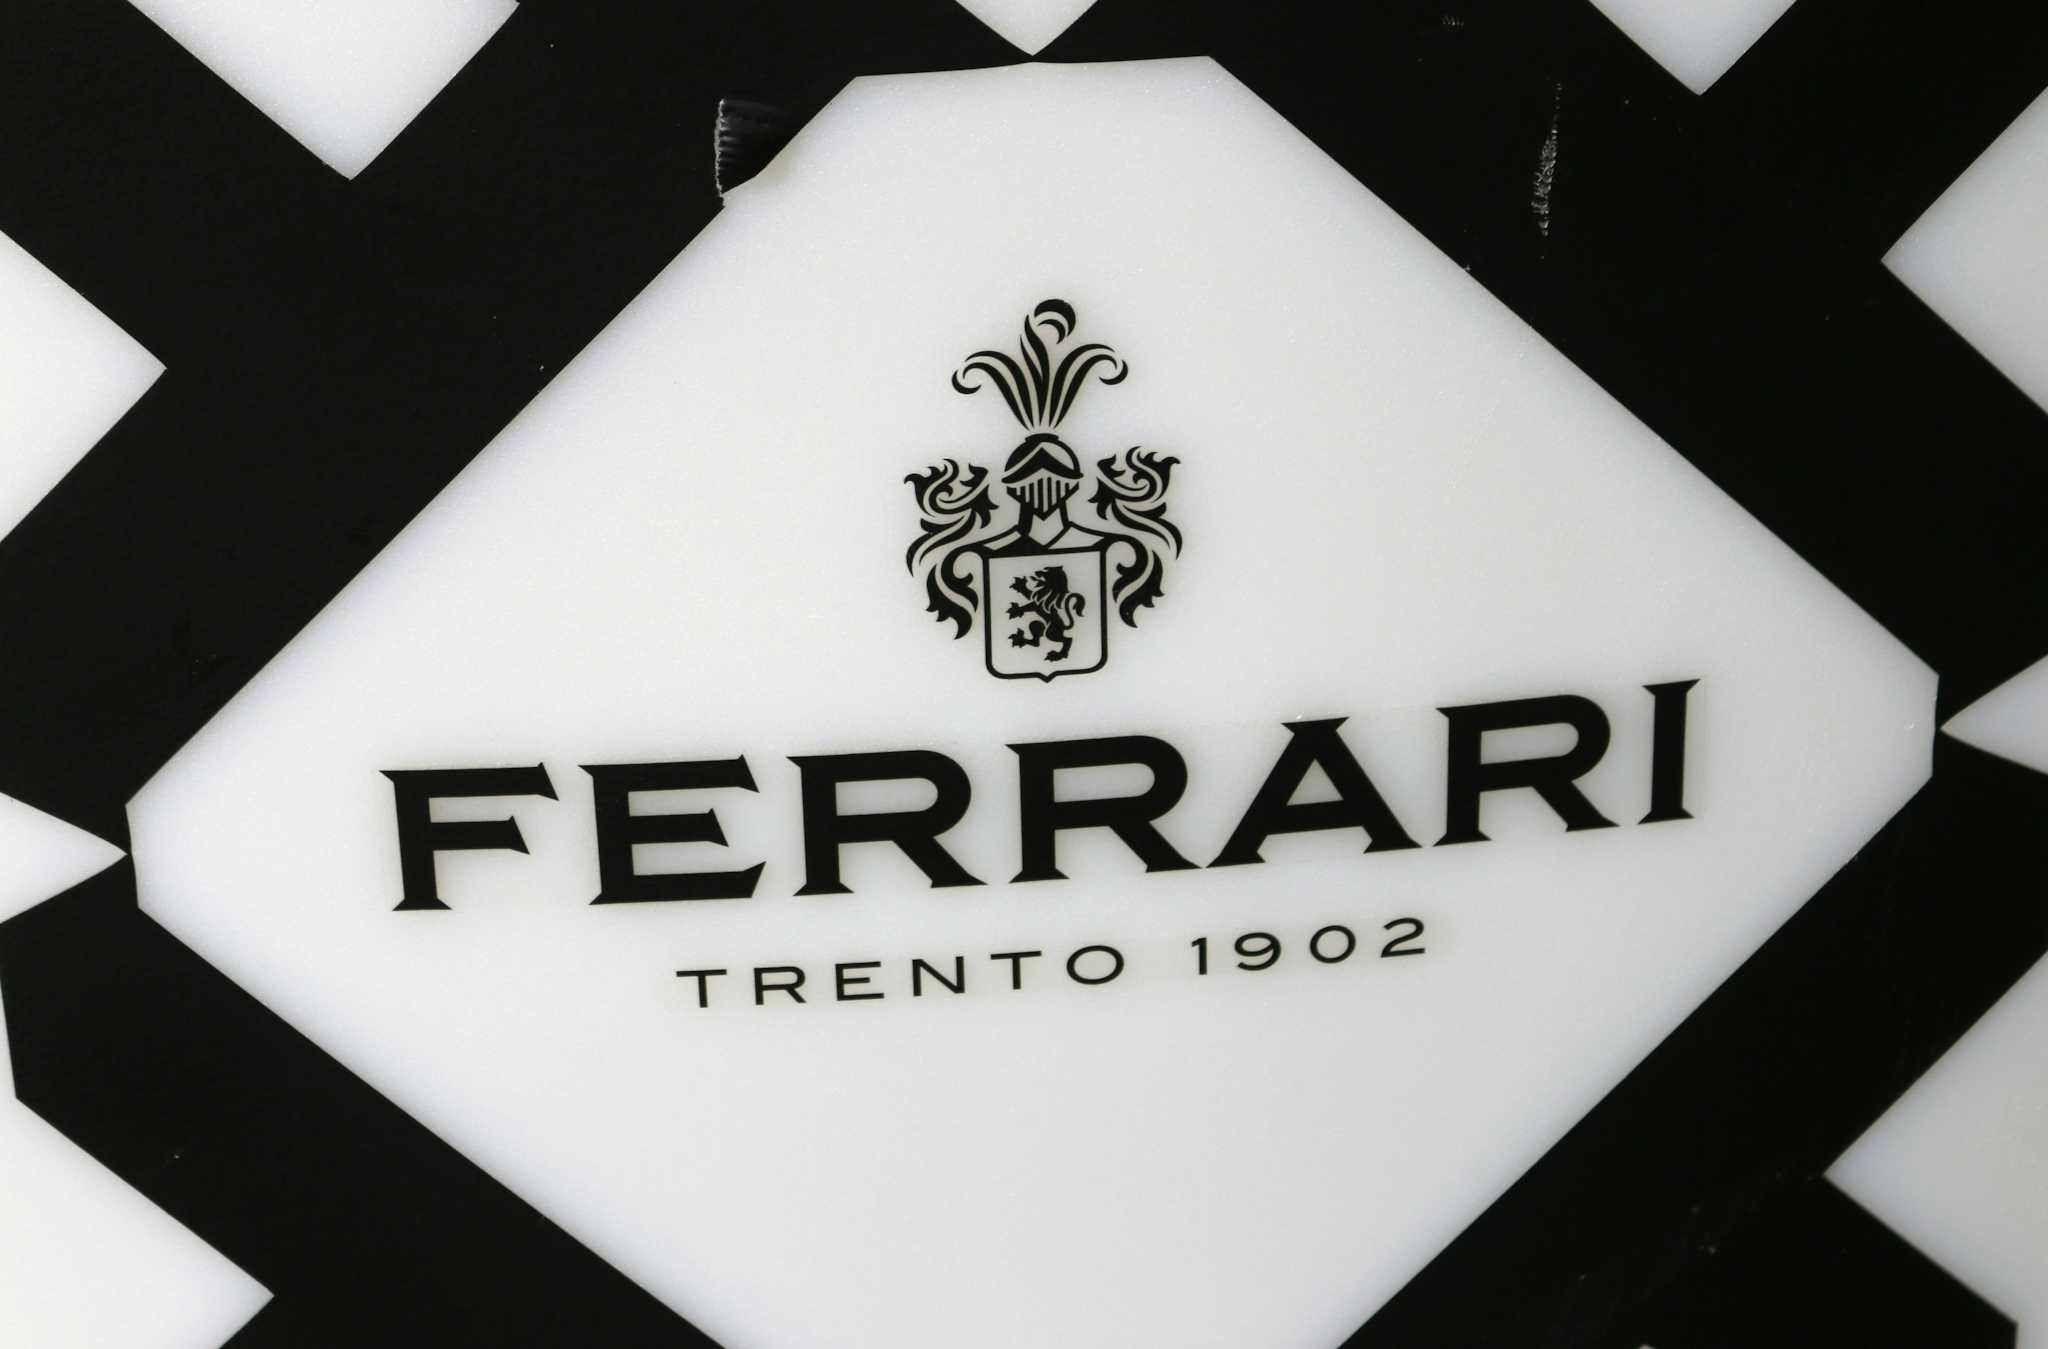 Ferrari winery